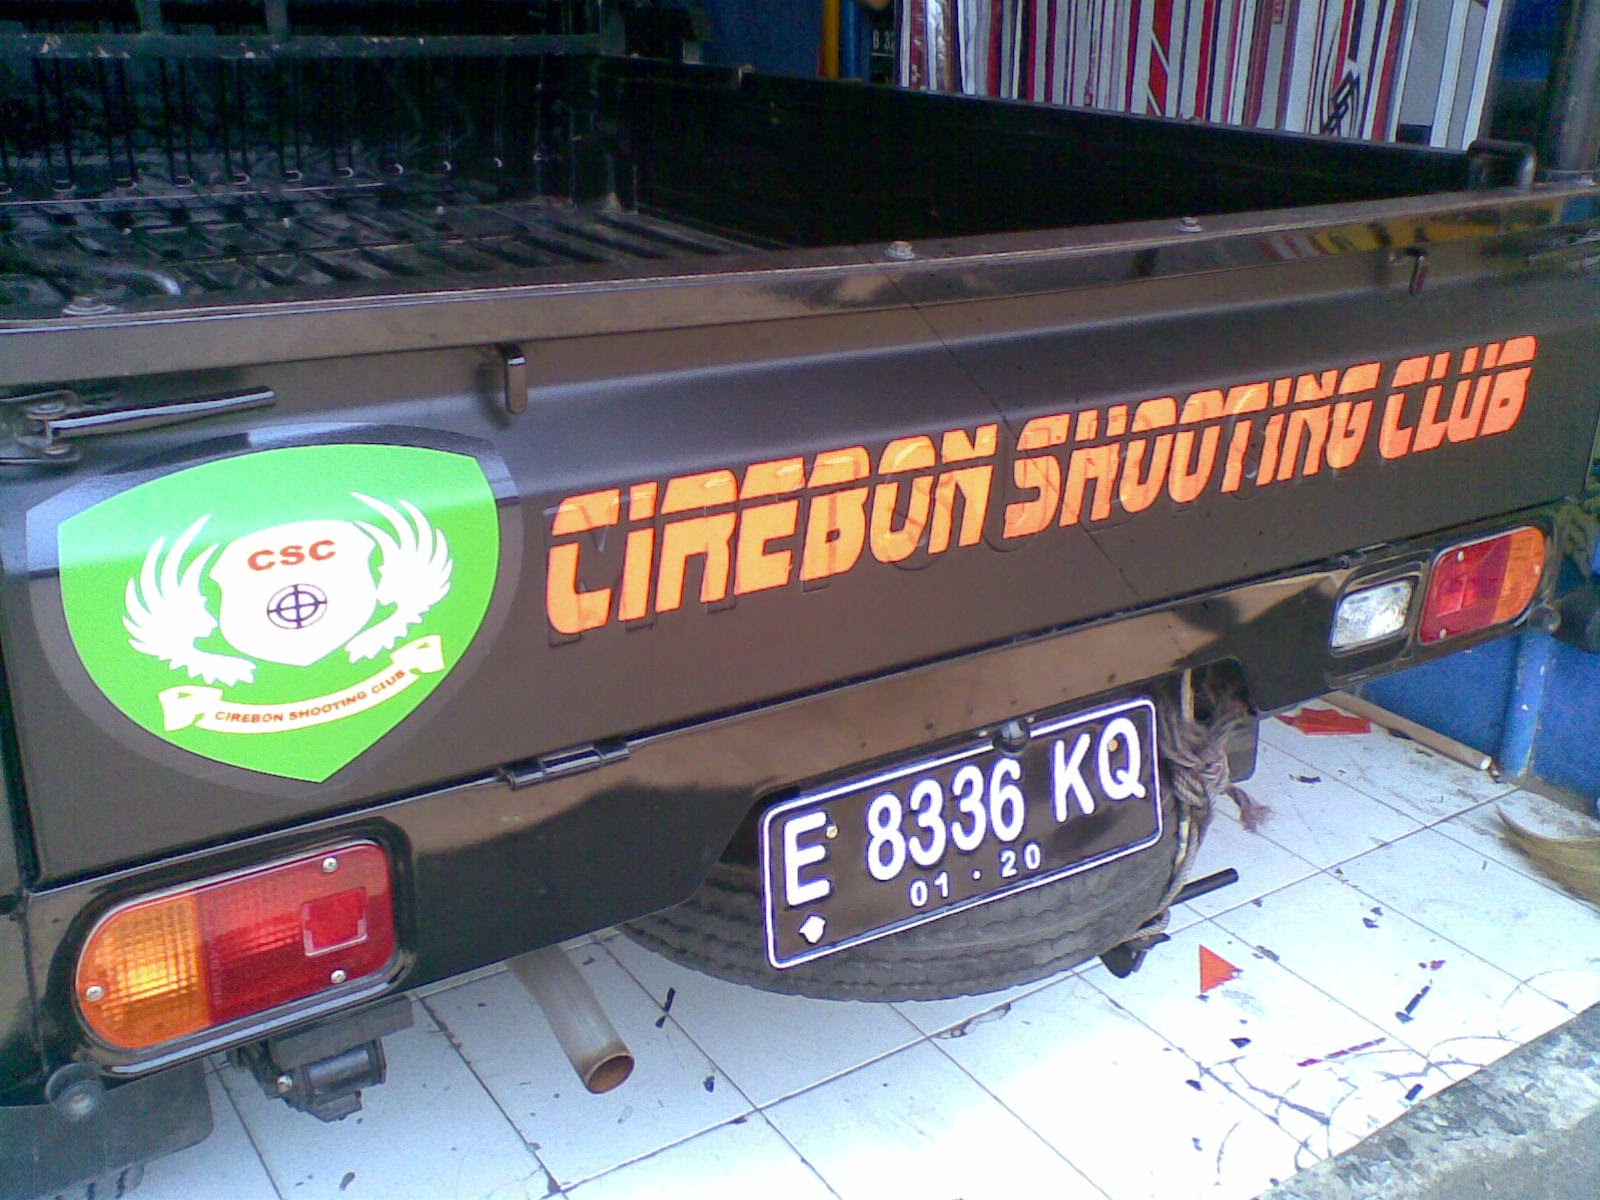 Pick Up T120ss Cirebon Shooting Club Pro Variasi